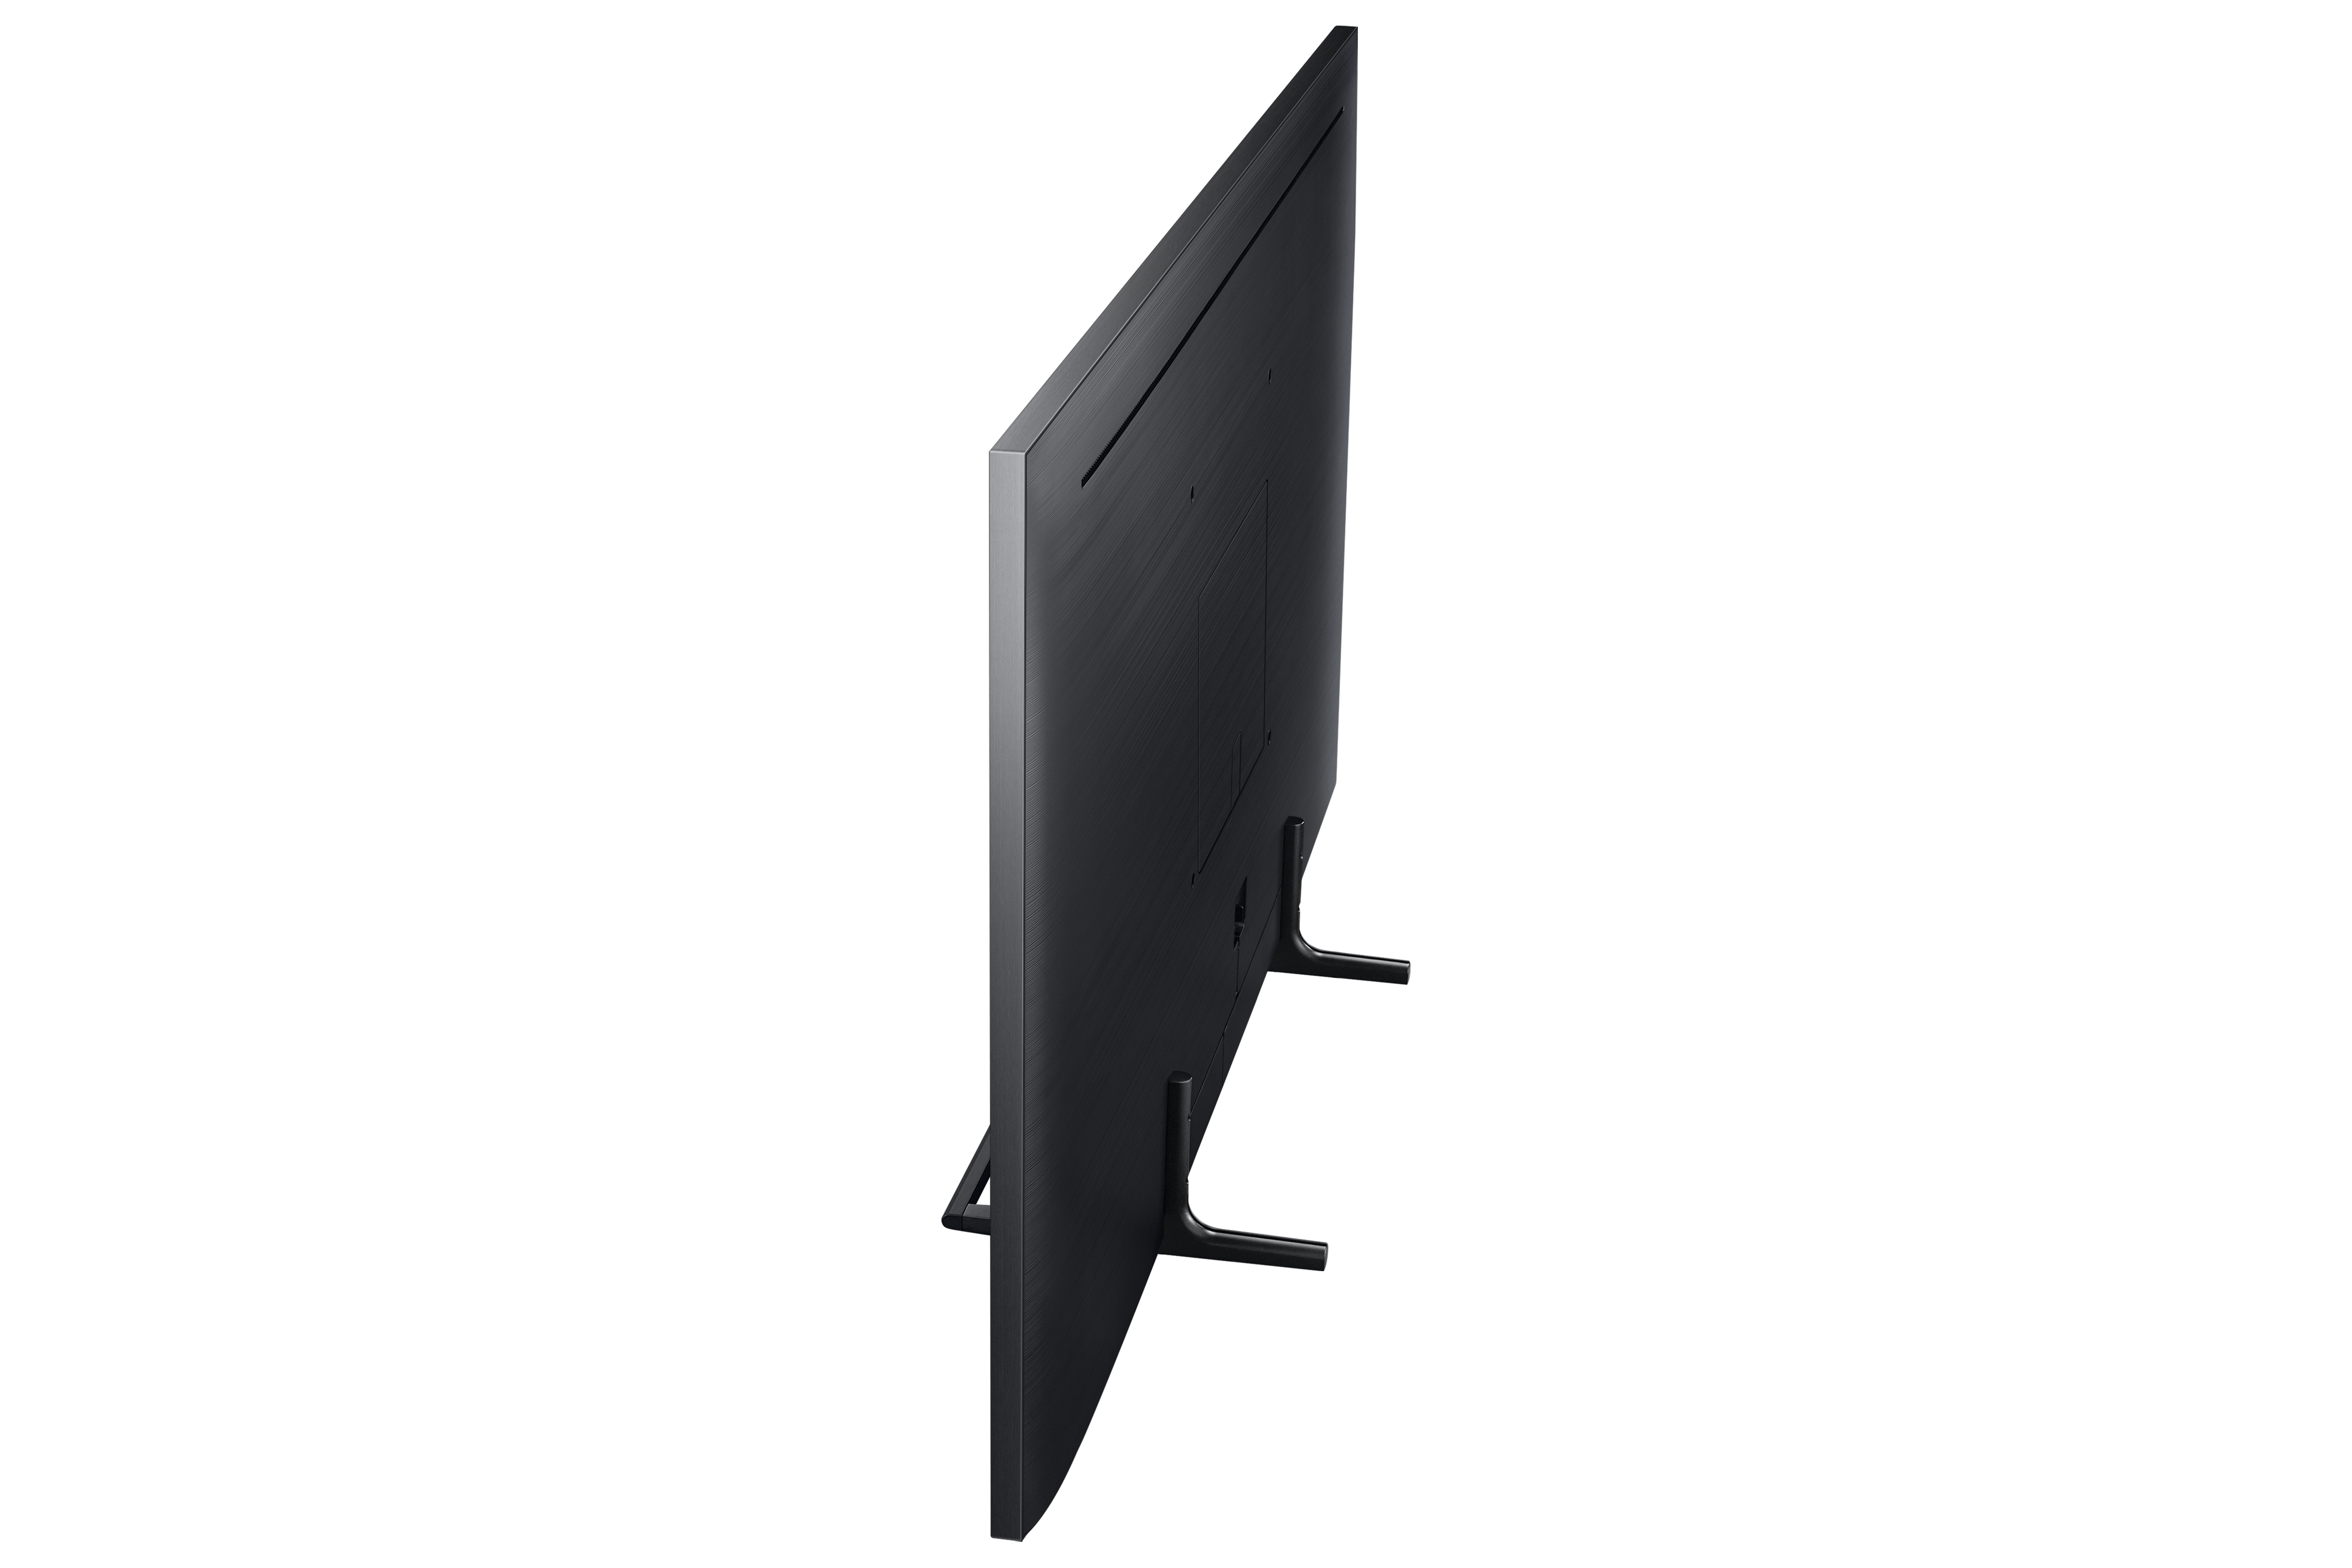 Restored Samsung 75" Class 4K Ultra HD (2160P) HDR Smart QLED TV (QN75Q9FNAFXZA) (Refurbished) - image 5 of 17